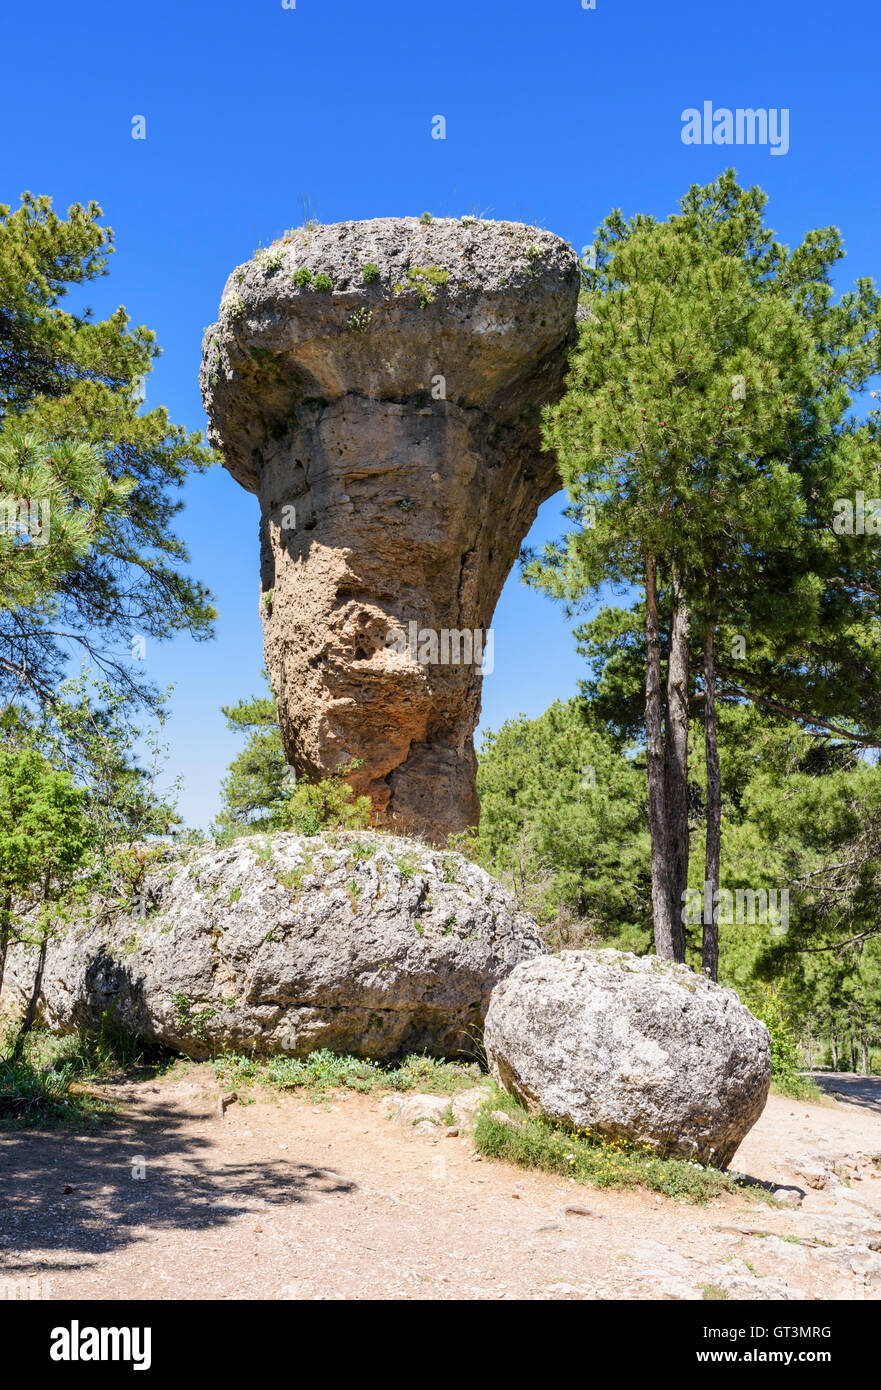 Formazione di roccia sagomata mediante erosione chiamato El Tormo Alto in La Ciudad Encantada vicino a Cuenca, Castilla La Mancha, in Spagna Foto Stock